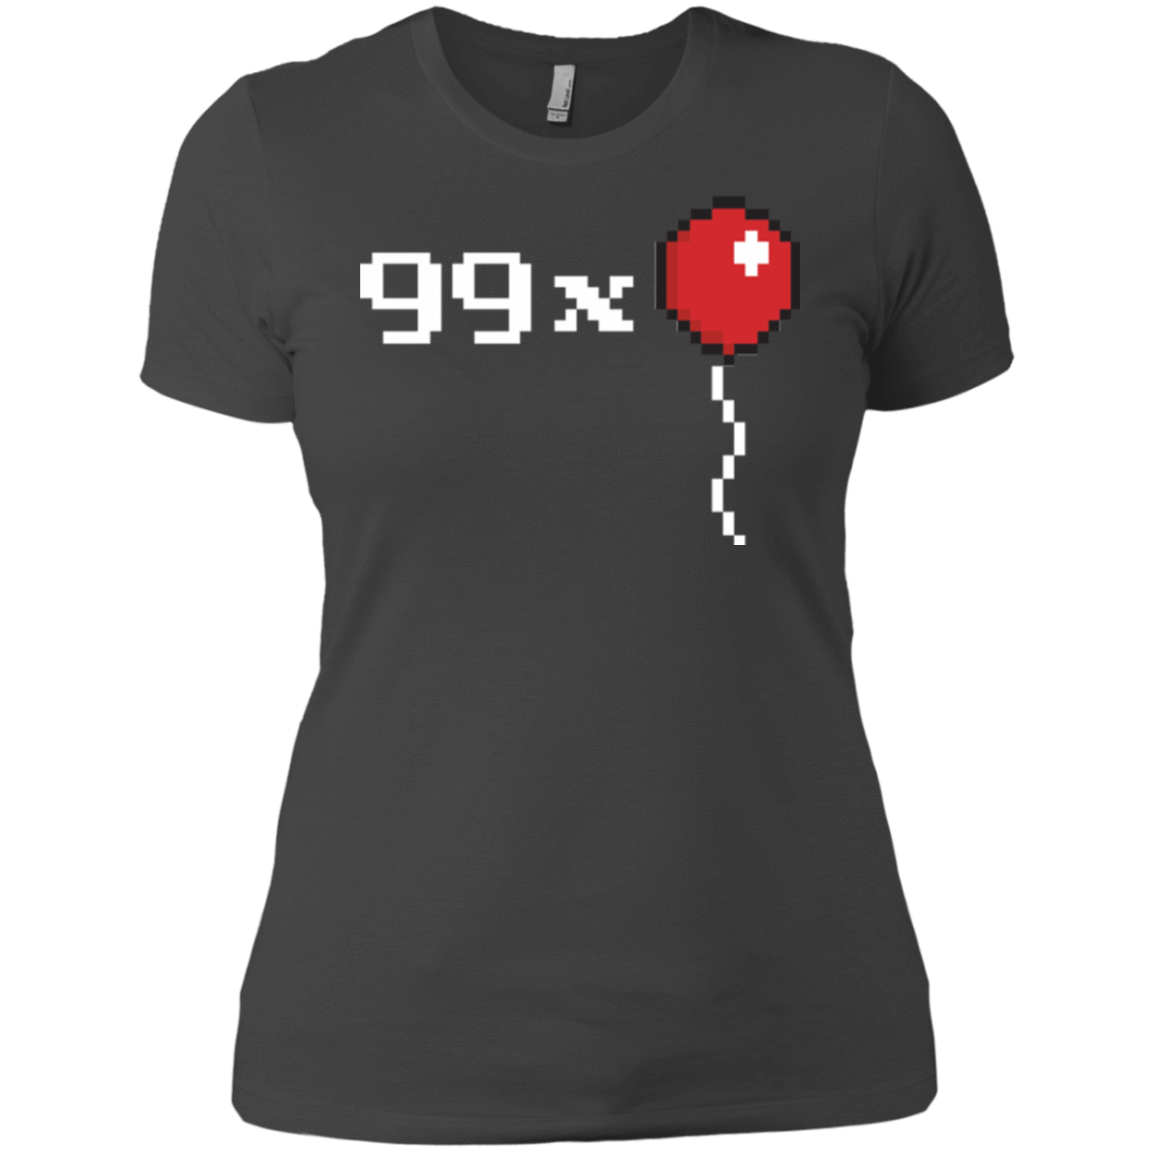 T-Shirts Heavy Metal / X-Small 99x Balloon Women's Premium T-Shirt